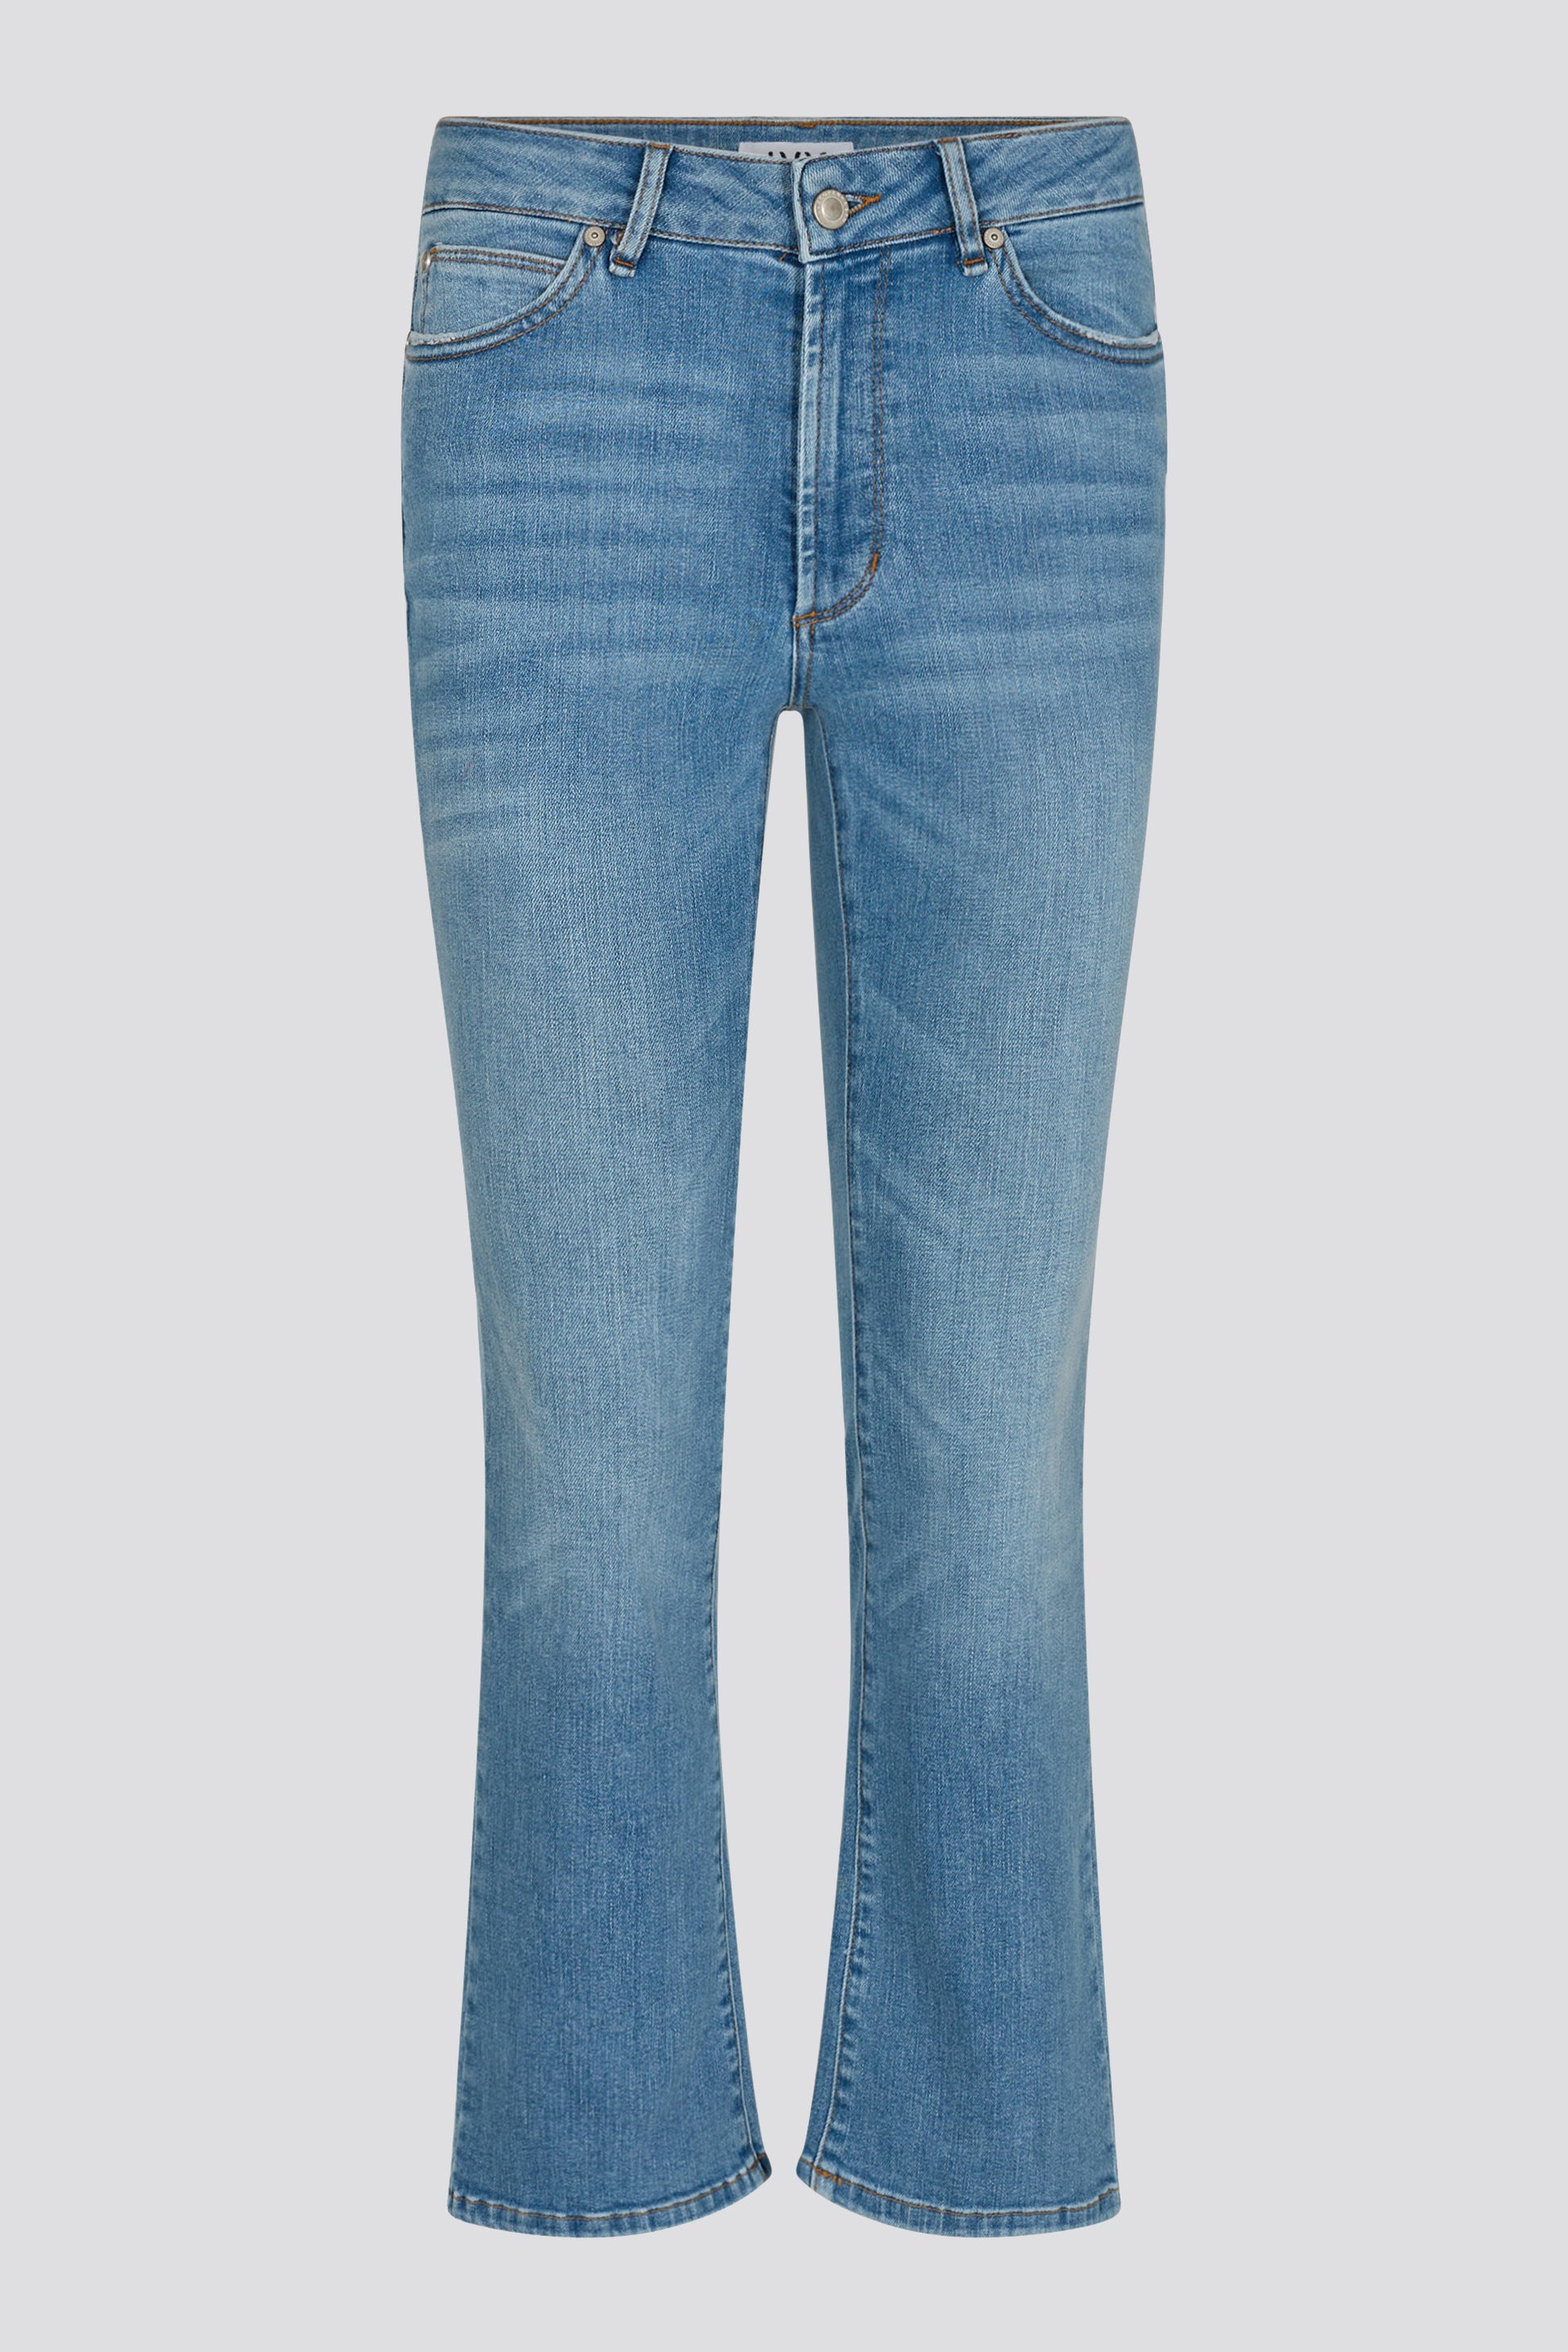 IVY Copenhagen IVY-Johanna EARTHxSWAN Jeans Wash Capri Blue Jeans & Pants 51 Denim Blue